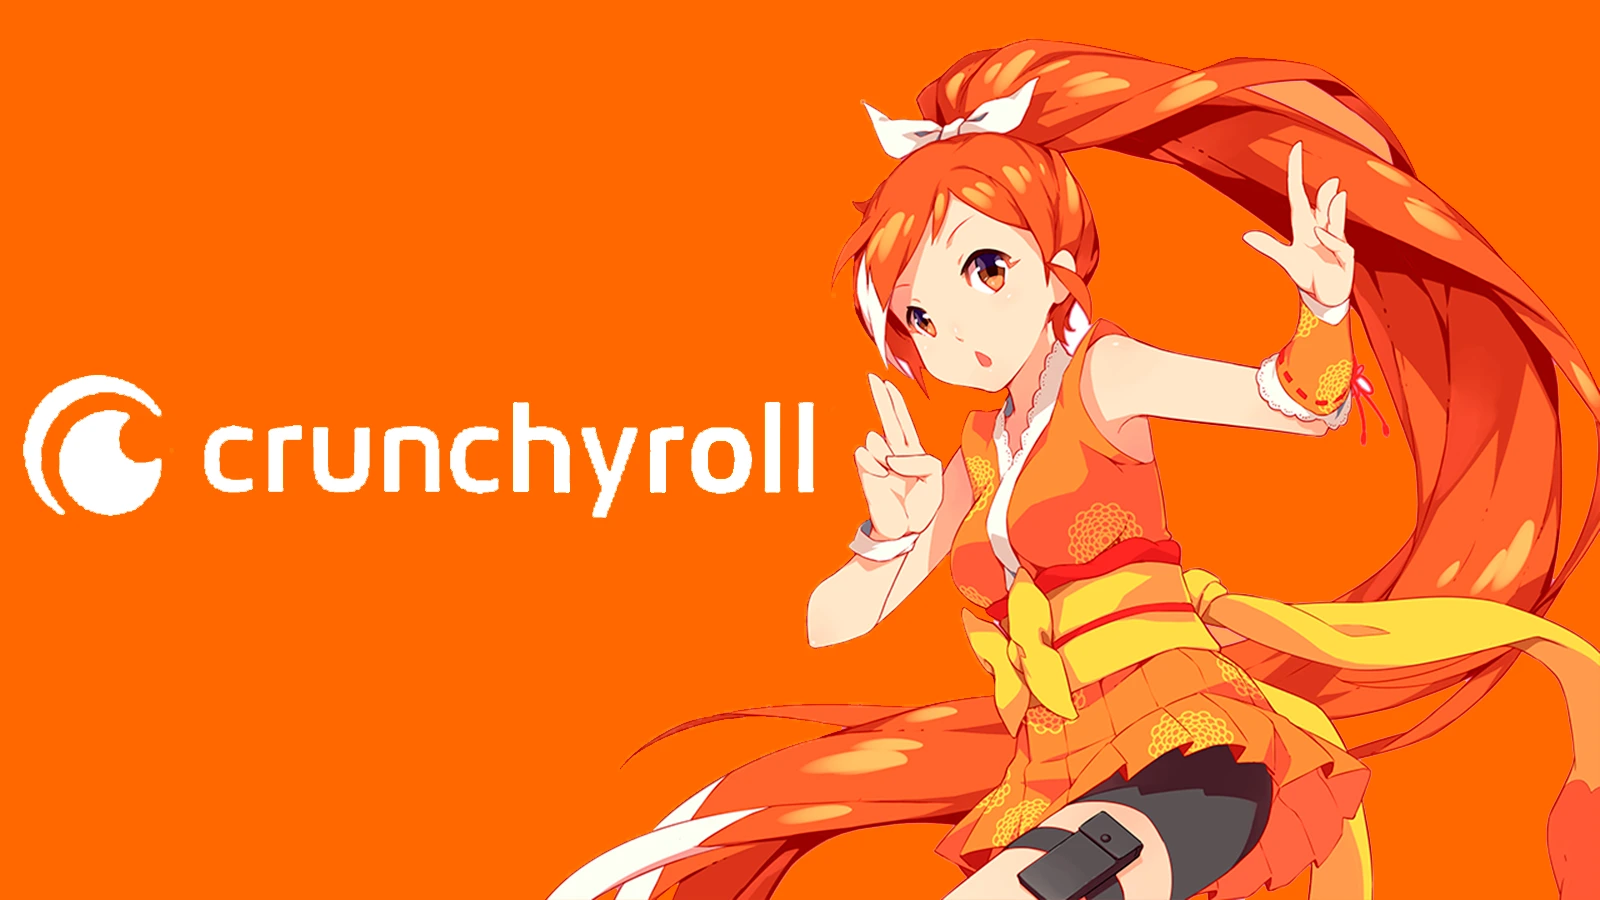 Crunchyroll anuncia simulcast de última temporada de Fairy Tail